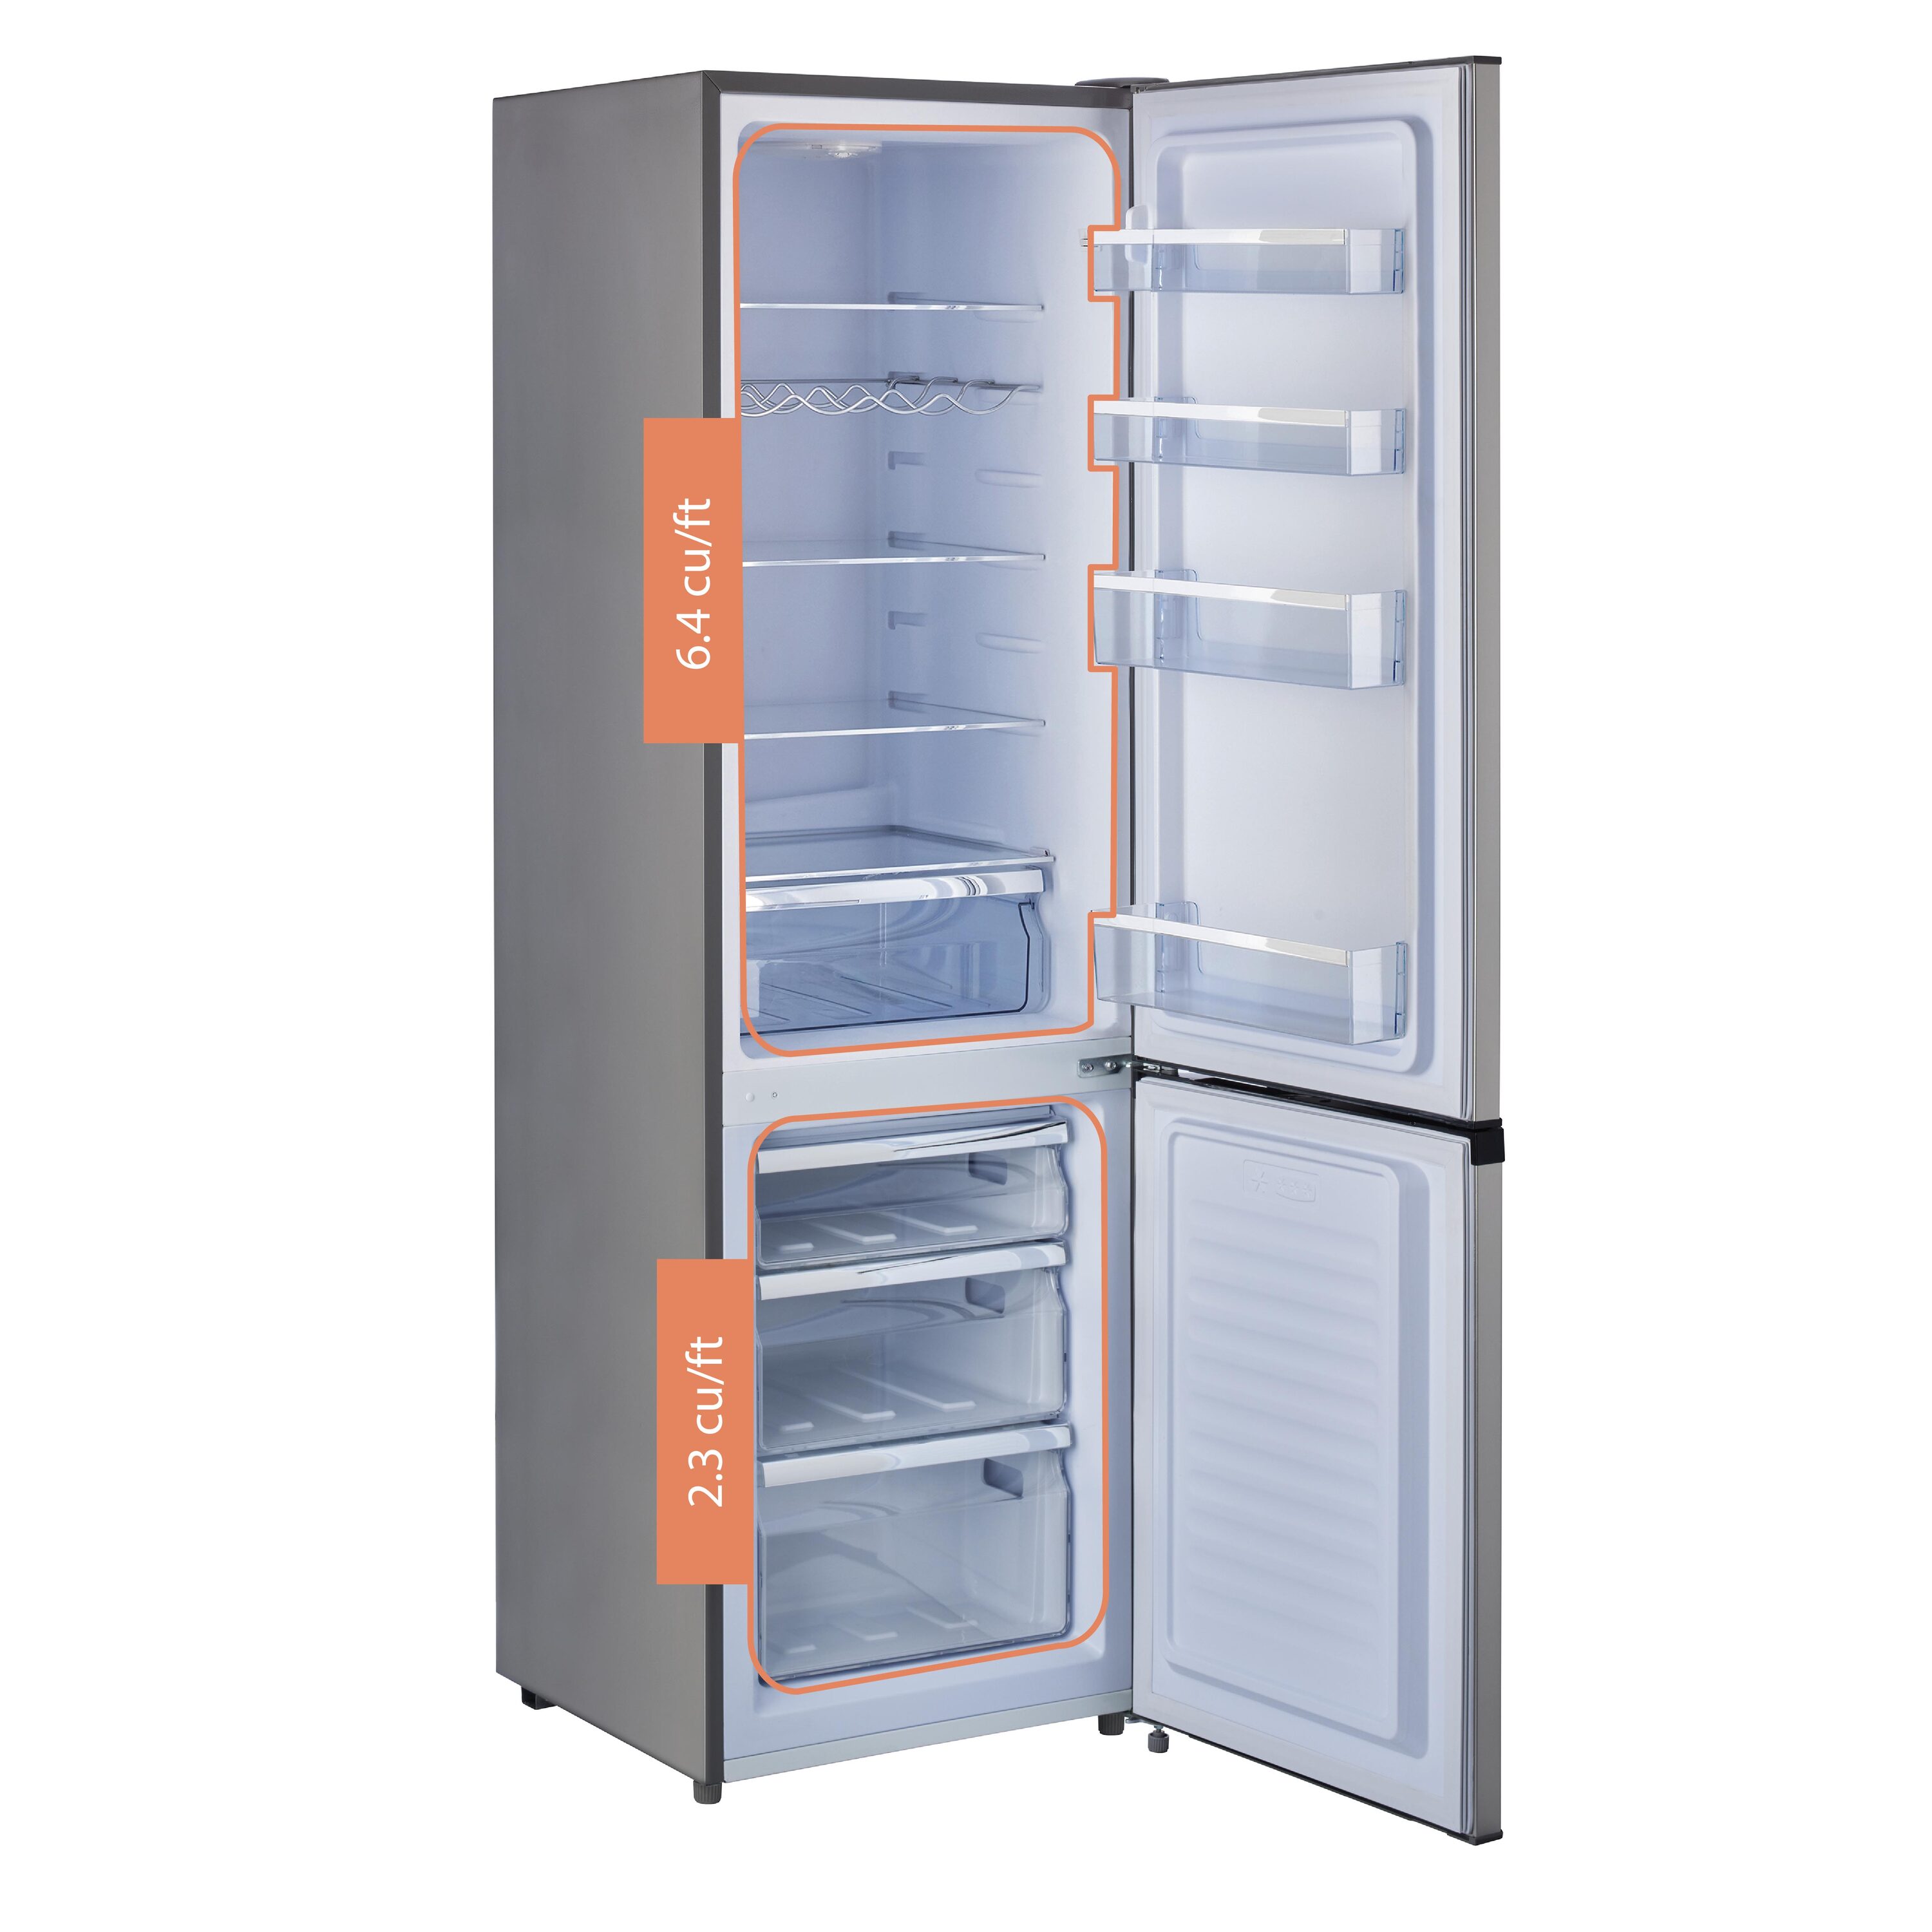 8.3 cu.ft Top Freezer Refrigerator in Dark Graphite